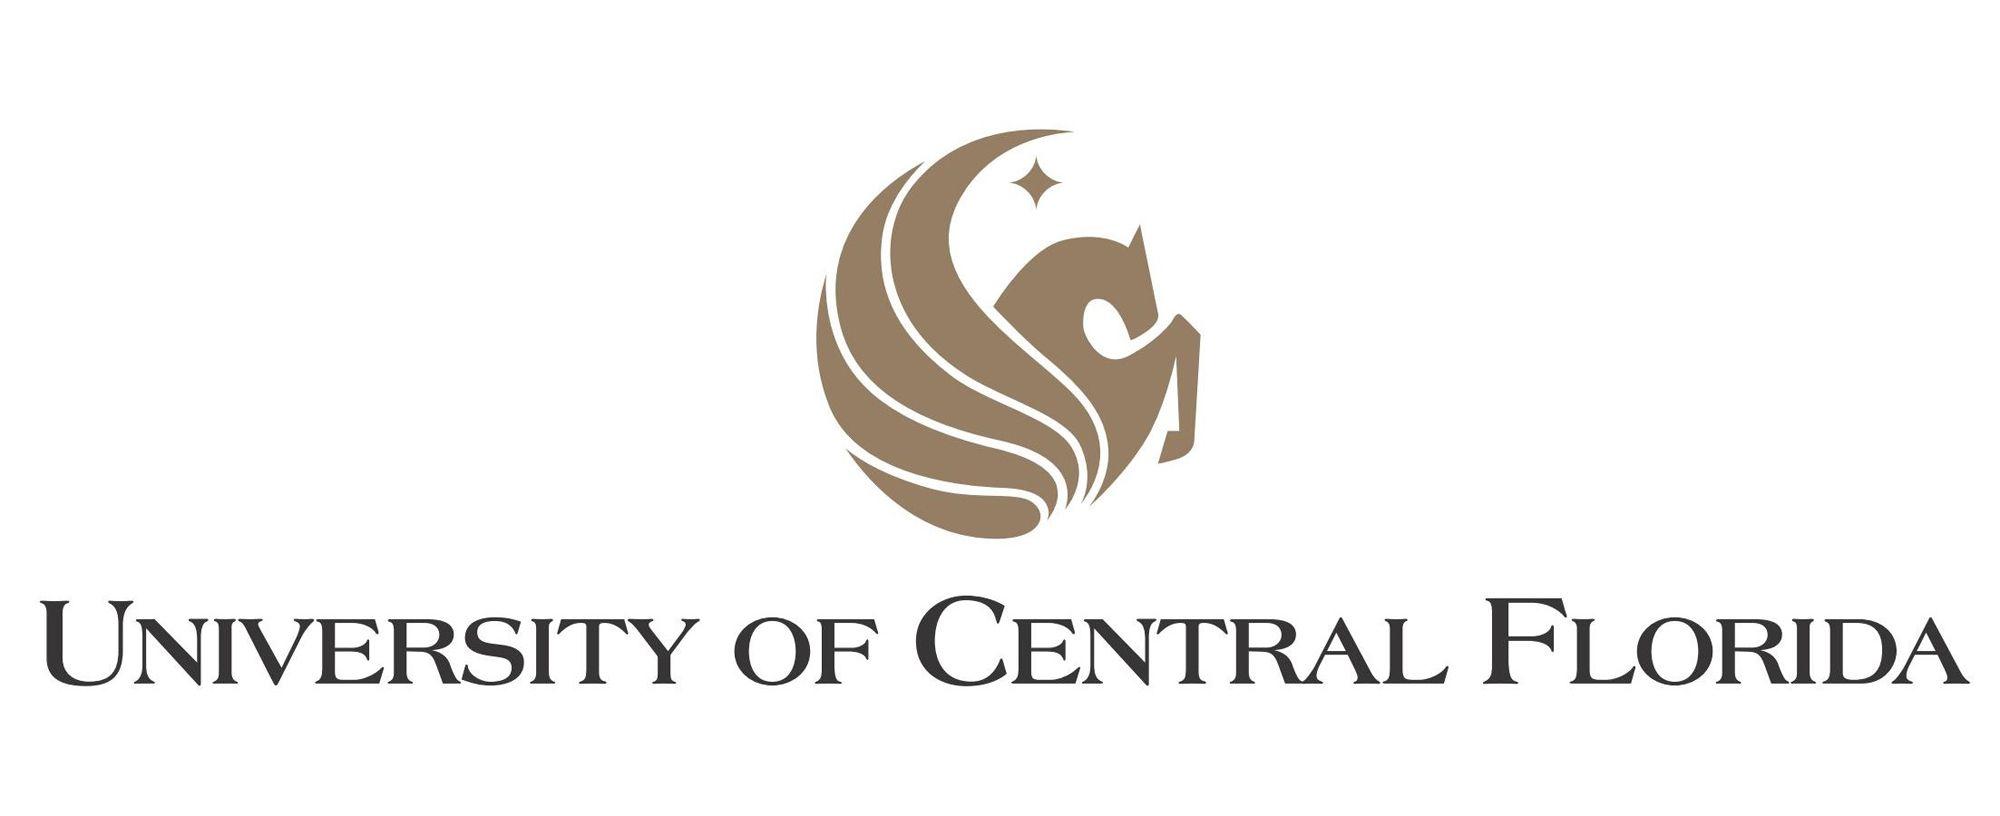 Horse Florida Logo - University of Central Florida Logo, University of Central Florida ...